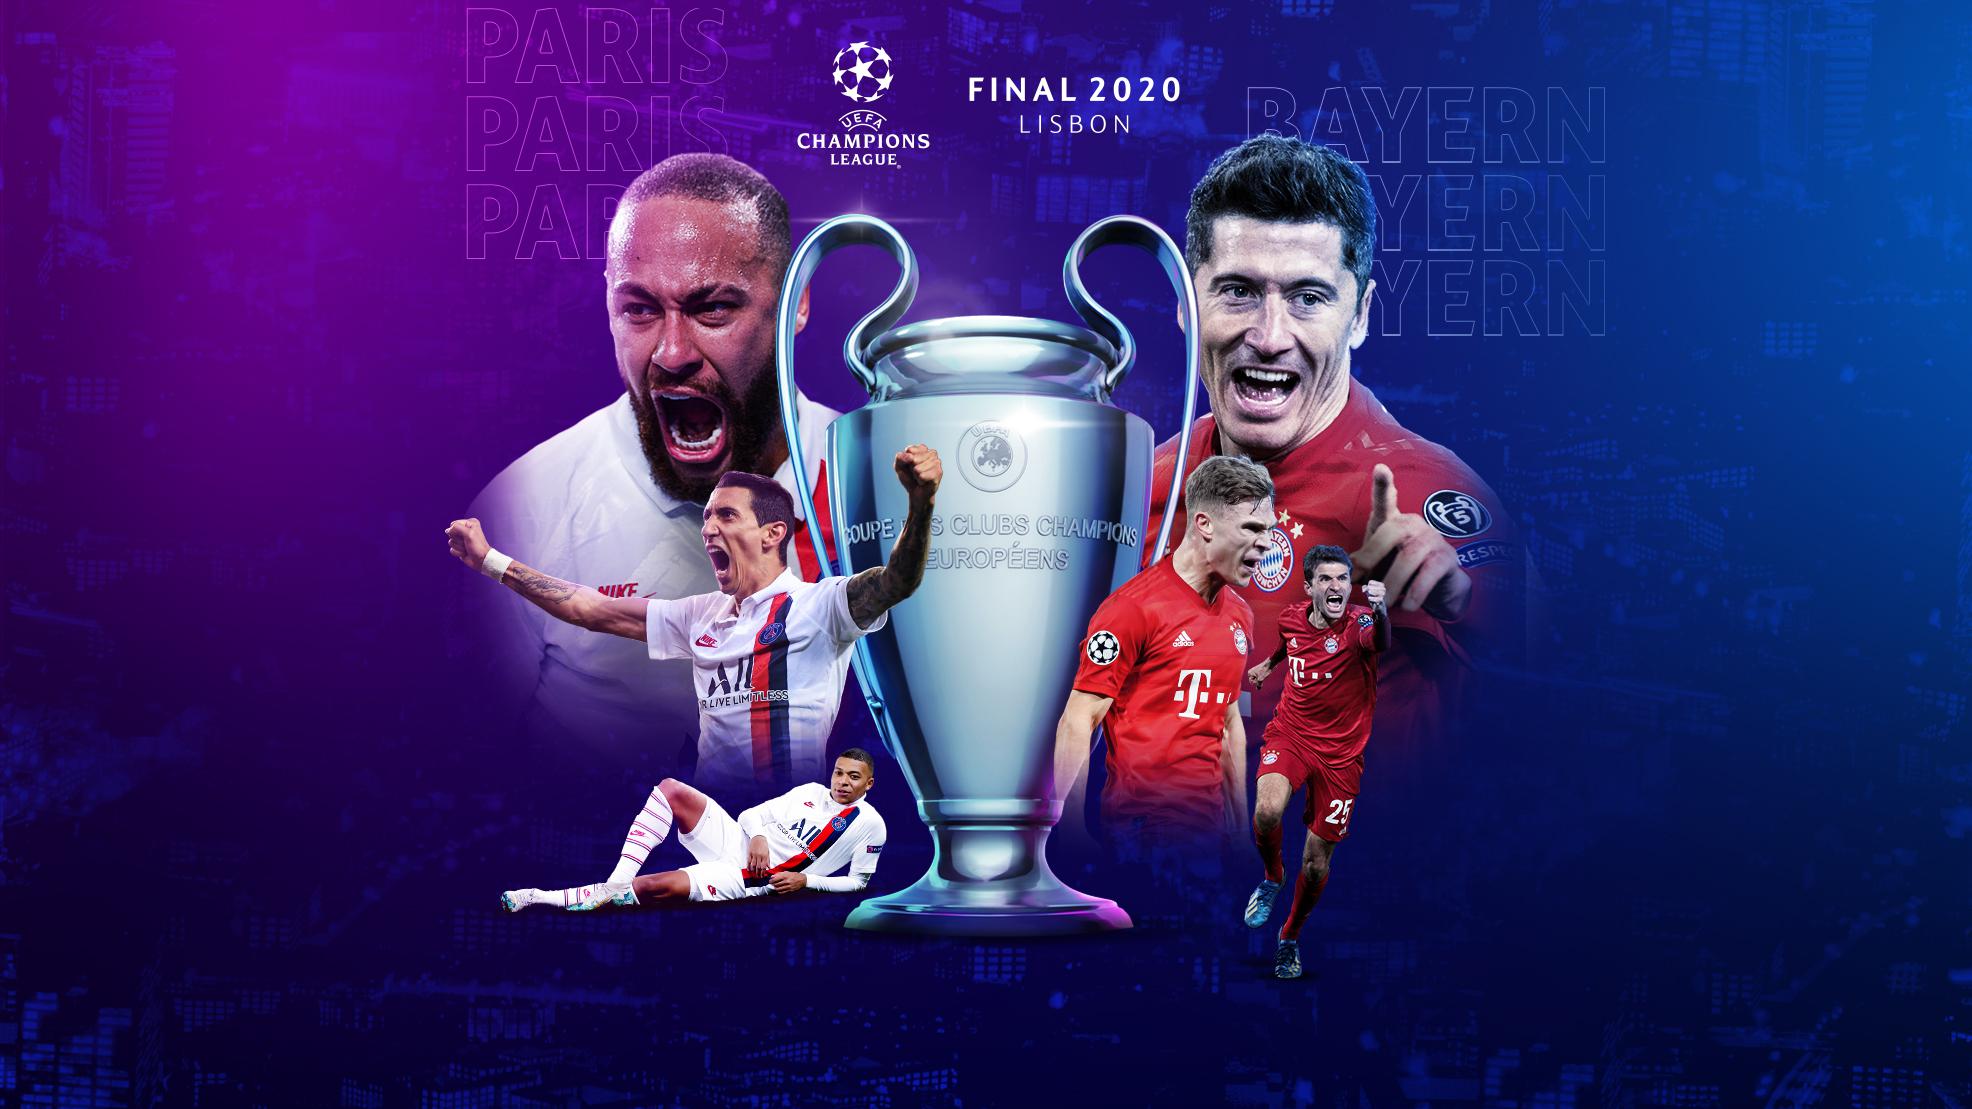 Paris vs Bayern Champions League final preview where to watch, team news, form guide UEFA Champions League UEFA